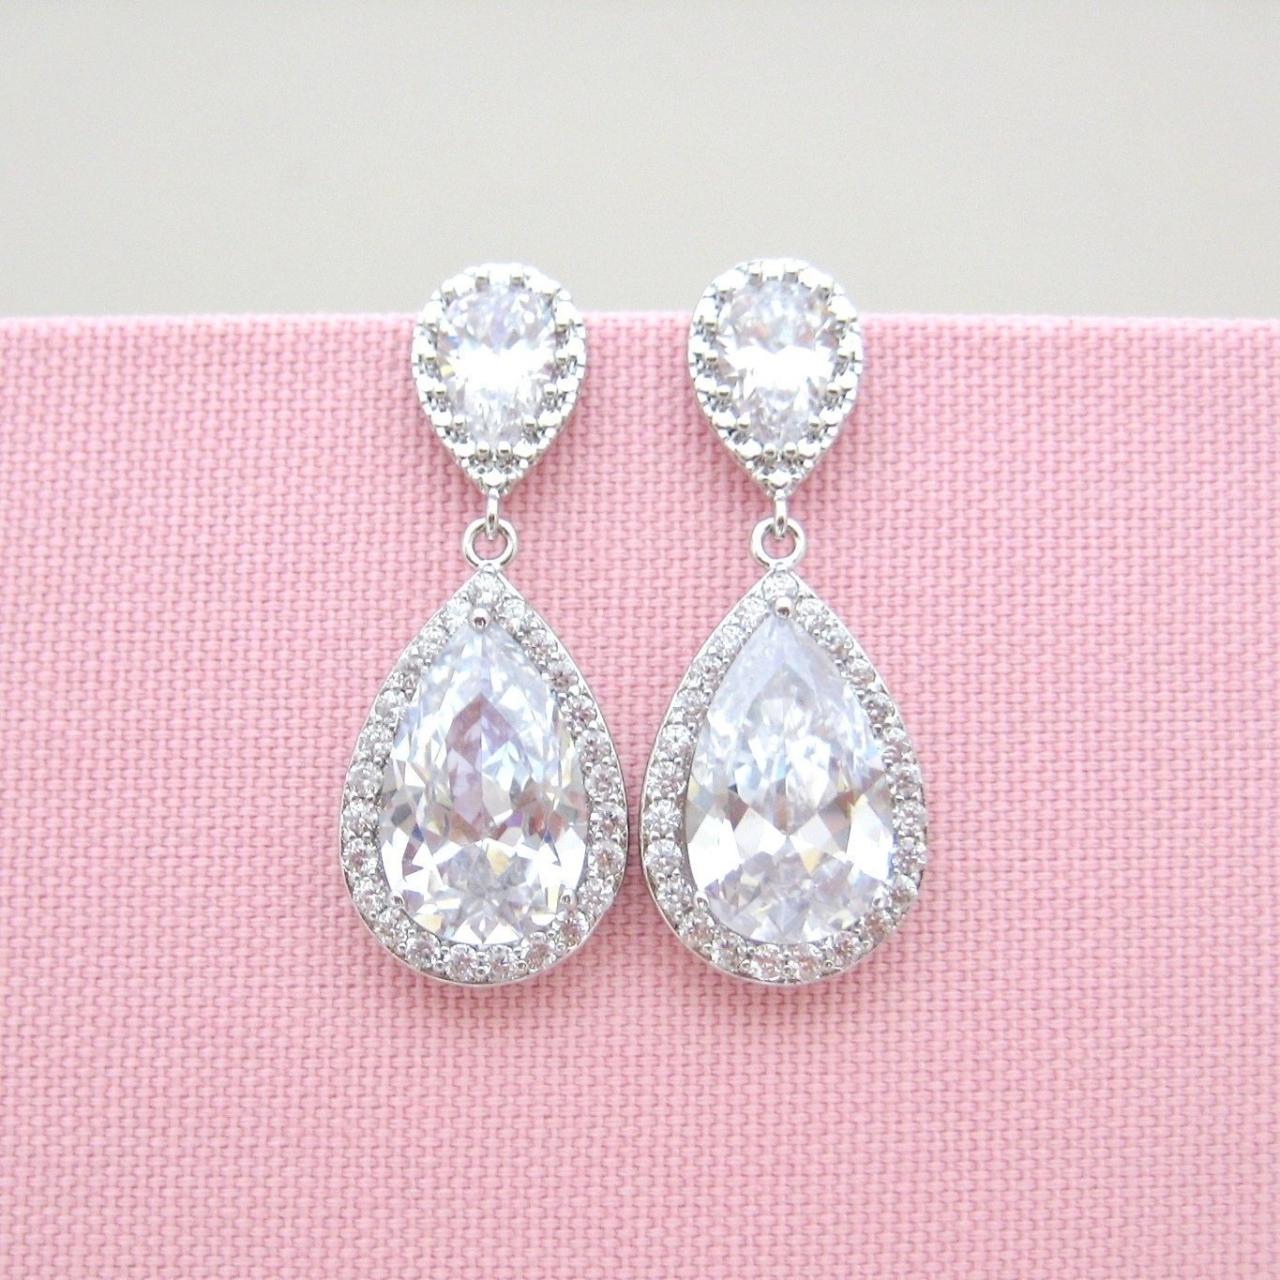 Bridal Earrings, Crystal Wedding Earrings, Clear Crystal Drop Earrings, Silver Zirconia Earrings, Teardrop Earrings, Bridesmaid Gift (e310)